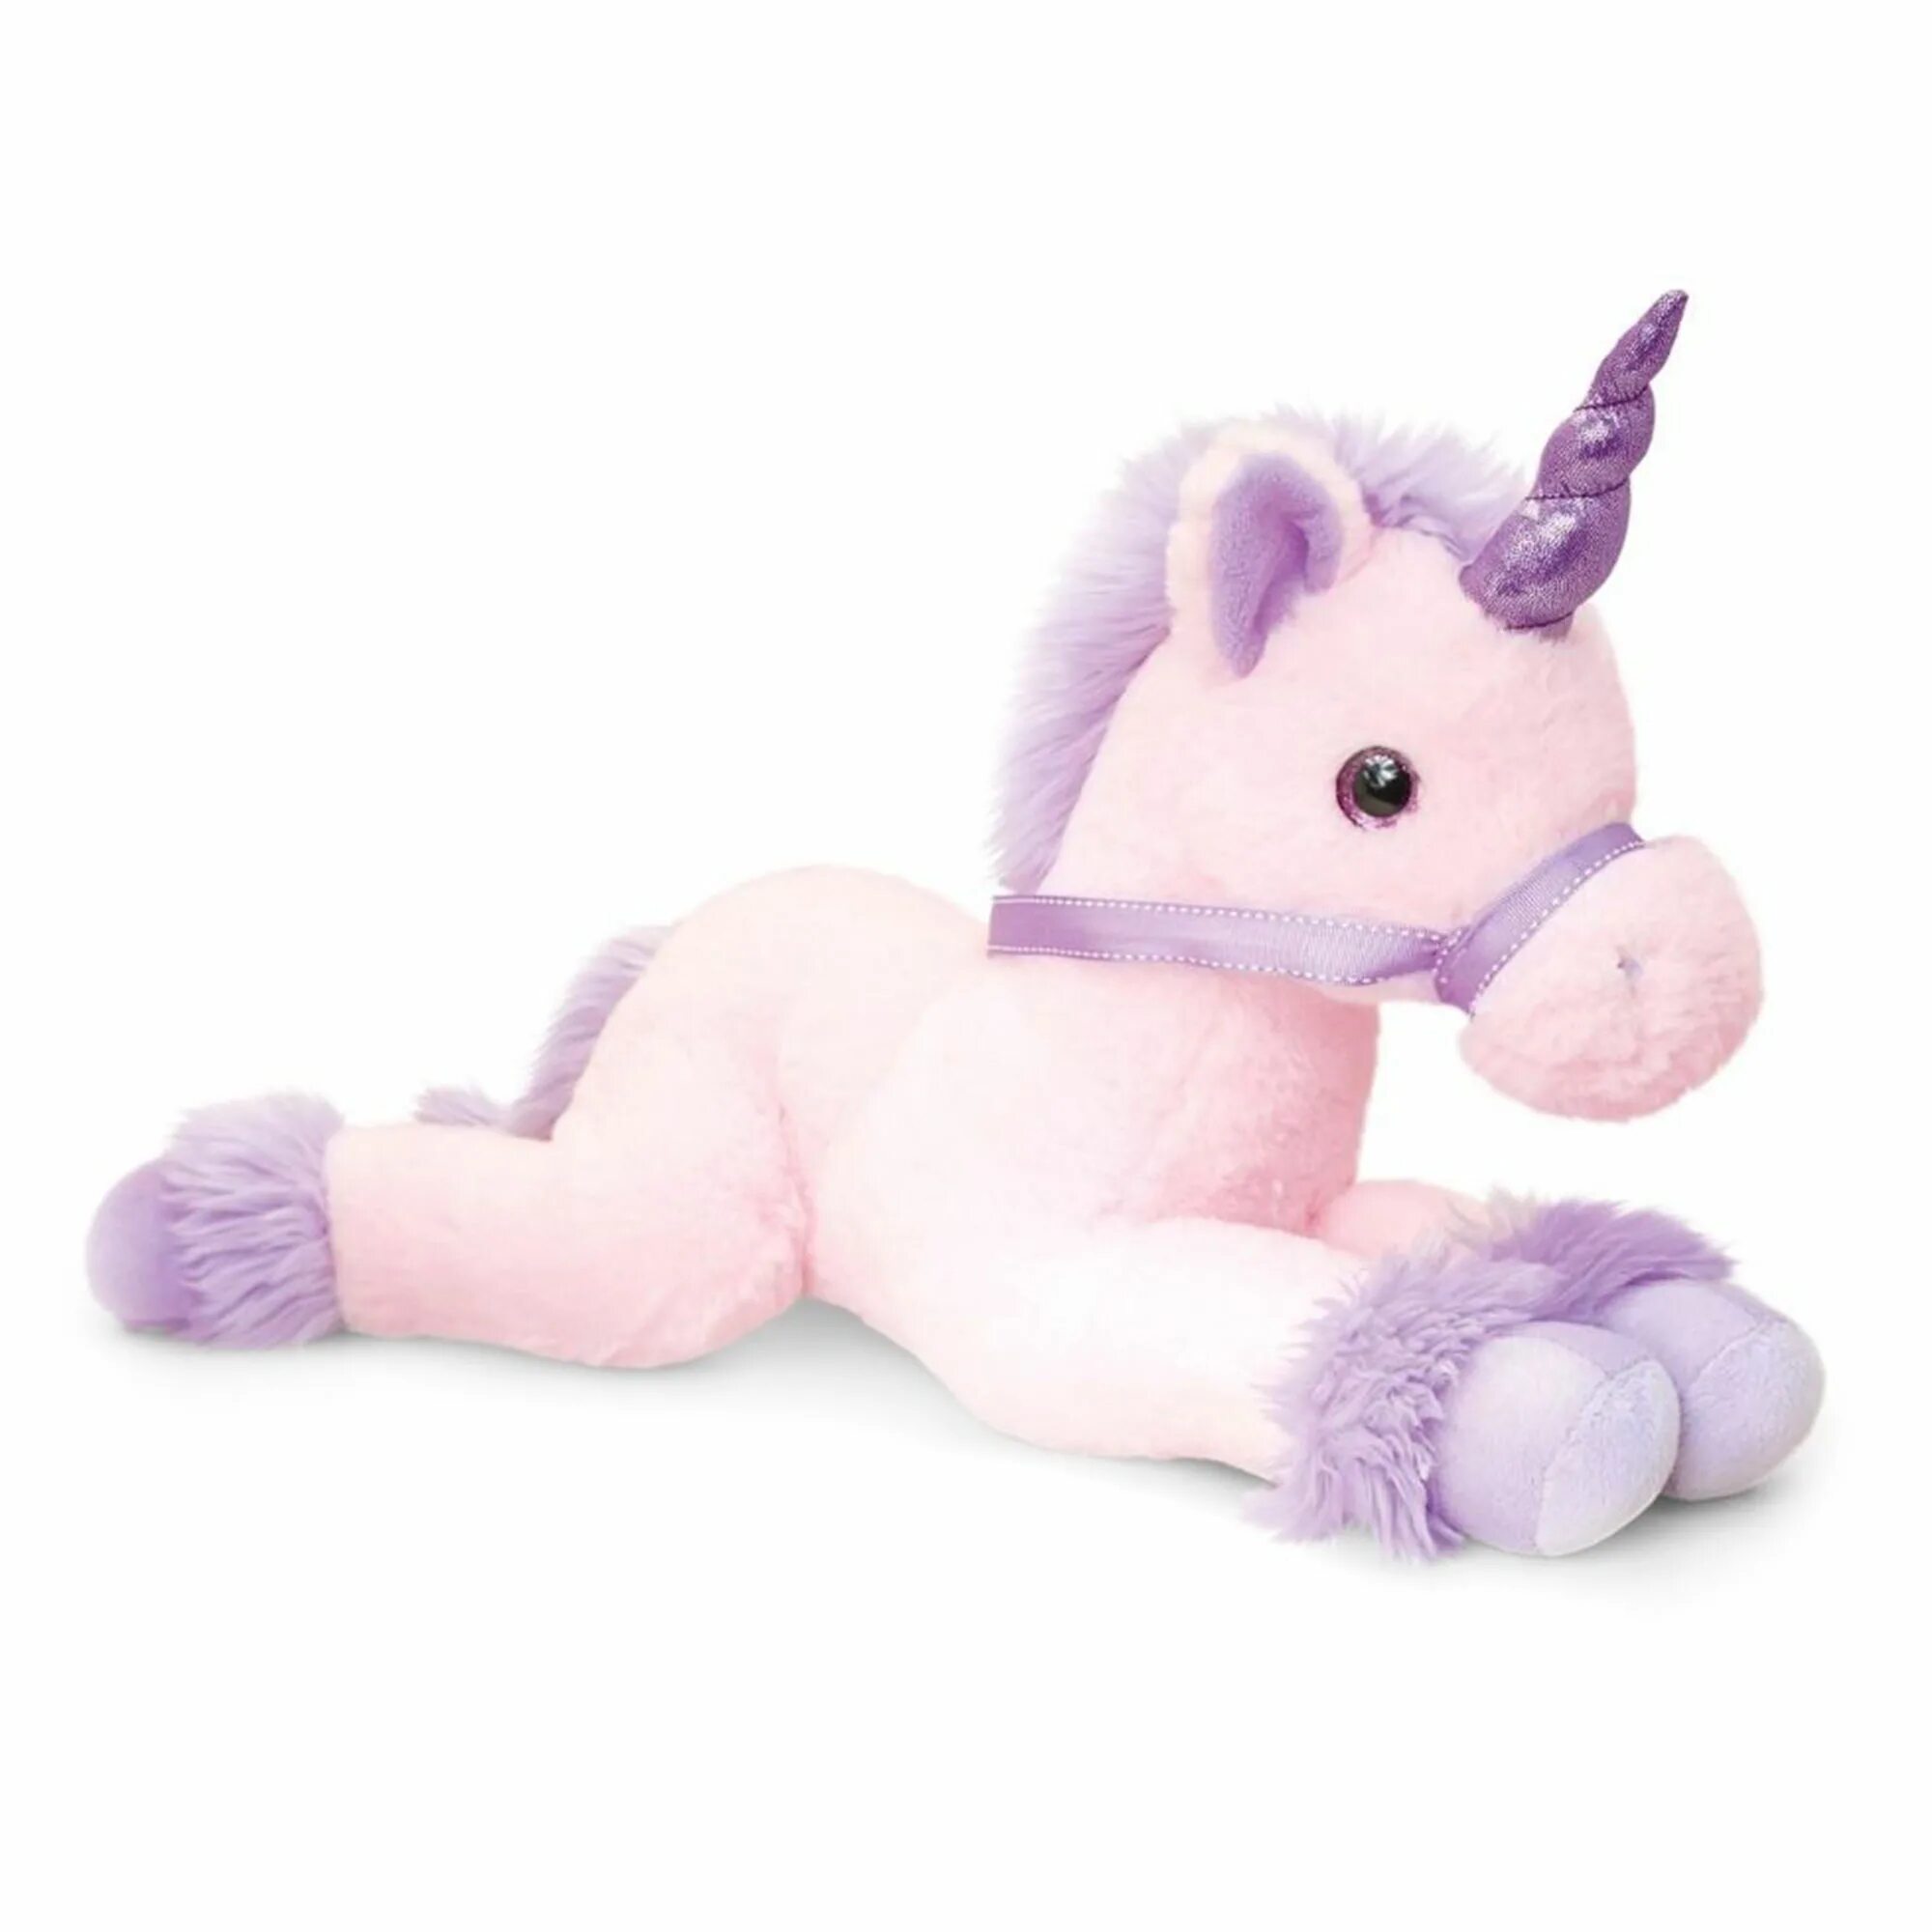 Мягкая игрушка единорог купить. Единорог игрушка keel Toys. Игрушка «Pink lying Unicorn» 85 см. Keel Toys мягкие игрушки Единорог. Единорог 70 см.